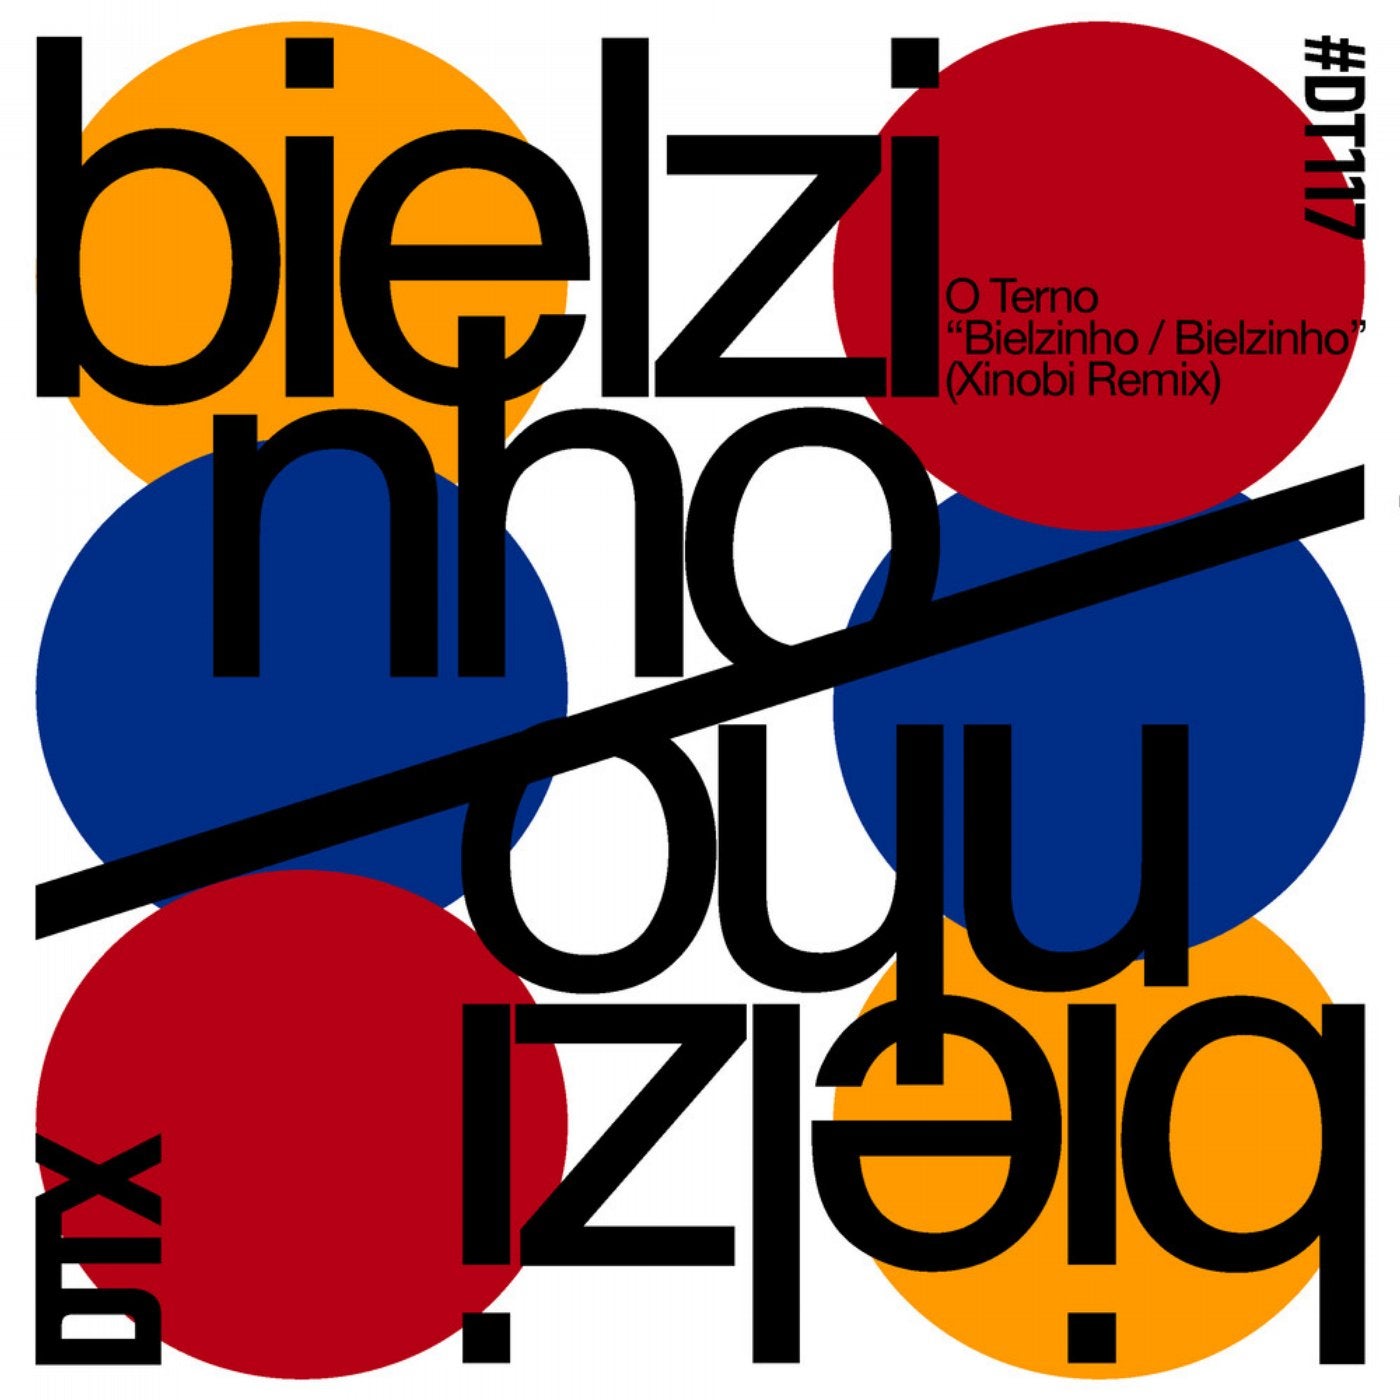 Bielzinho / Bielzinho (Xinobi Remix)